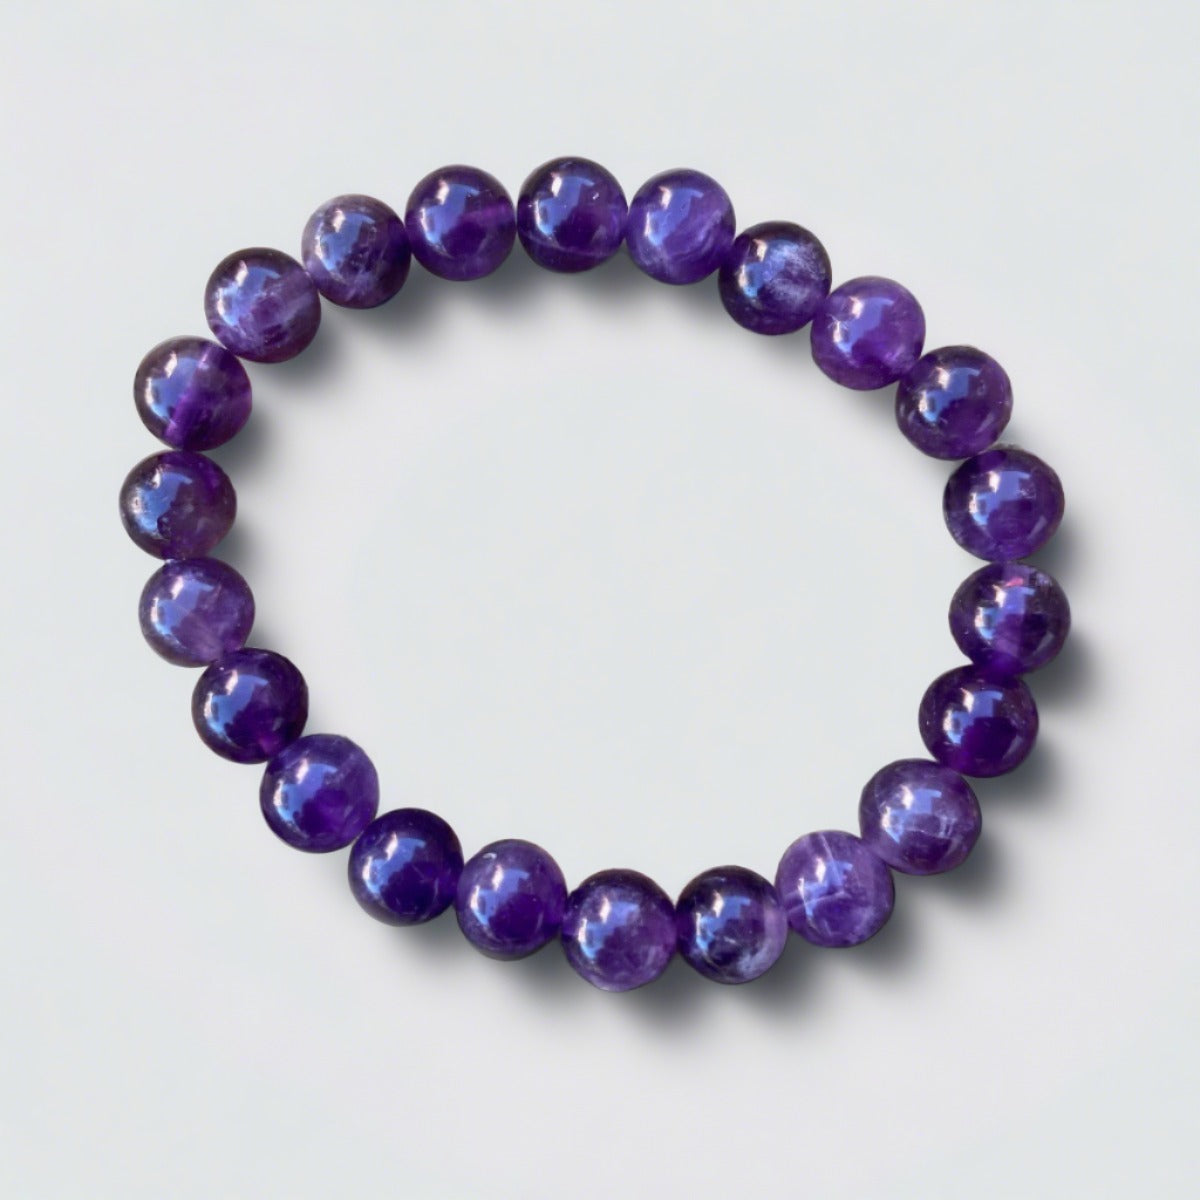 A stretch cord bracelet featuring deep purple amethyst gemstones